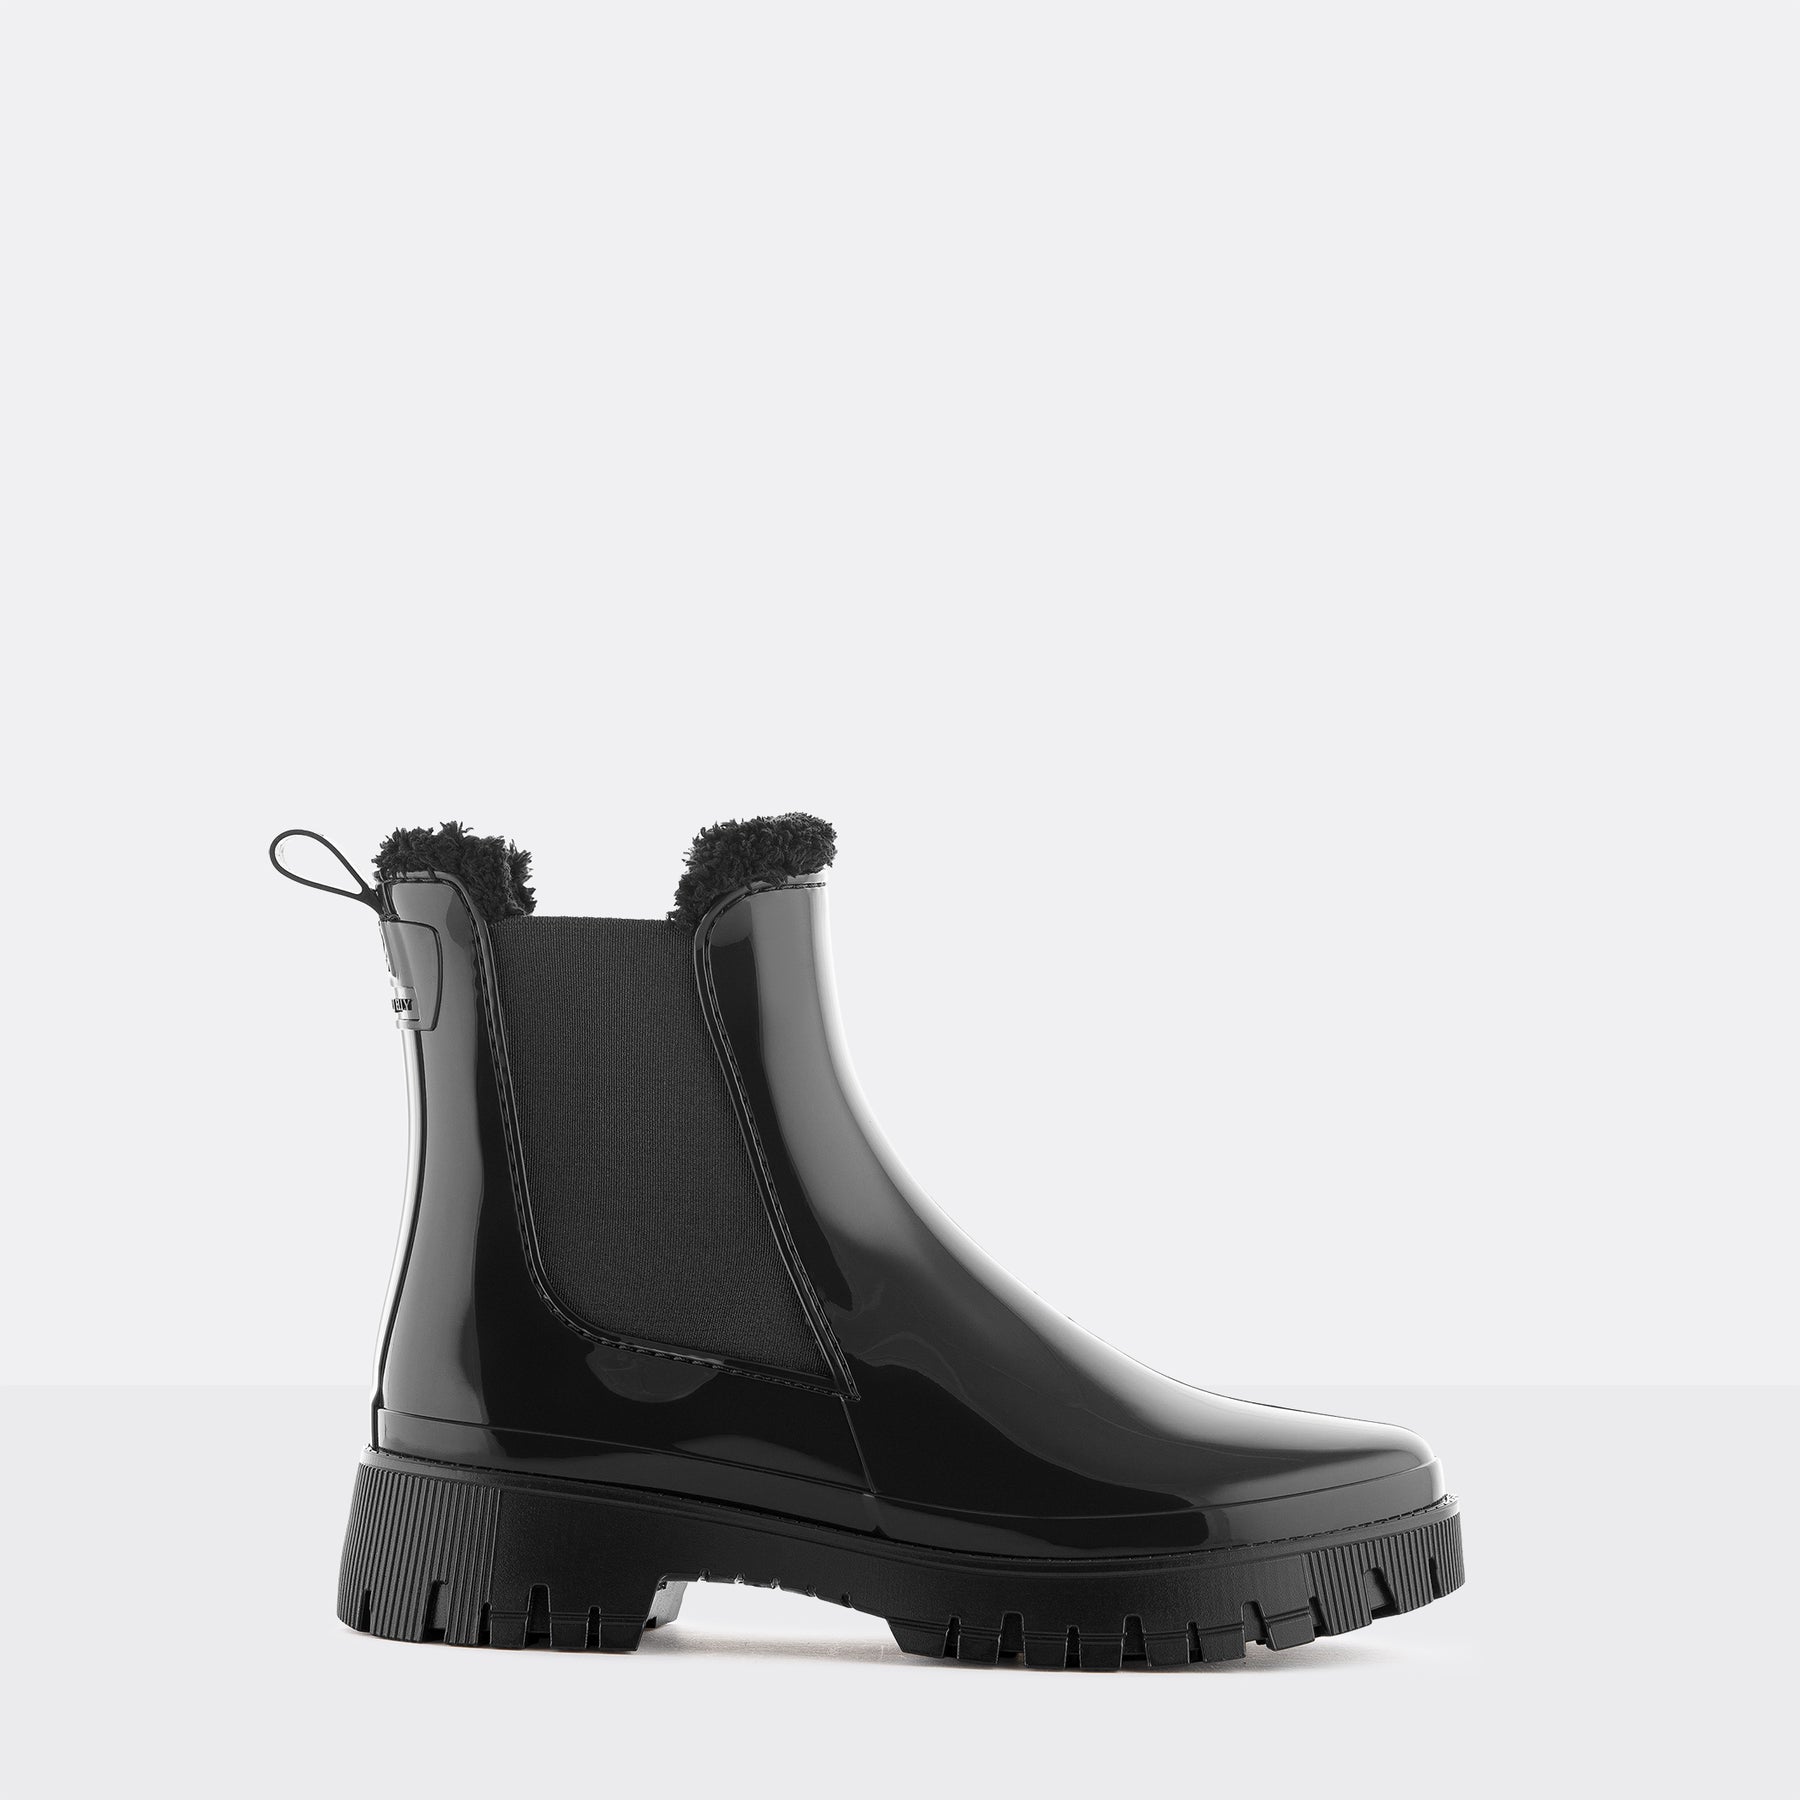 Colden Black - Chelsea Ankle Boots - Casual Shoes for Women - Shop ...